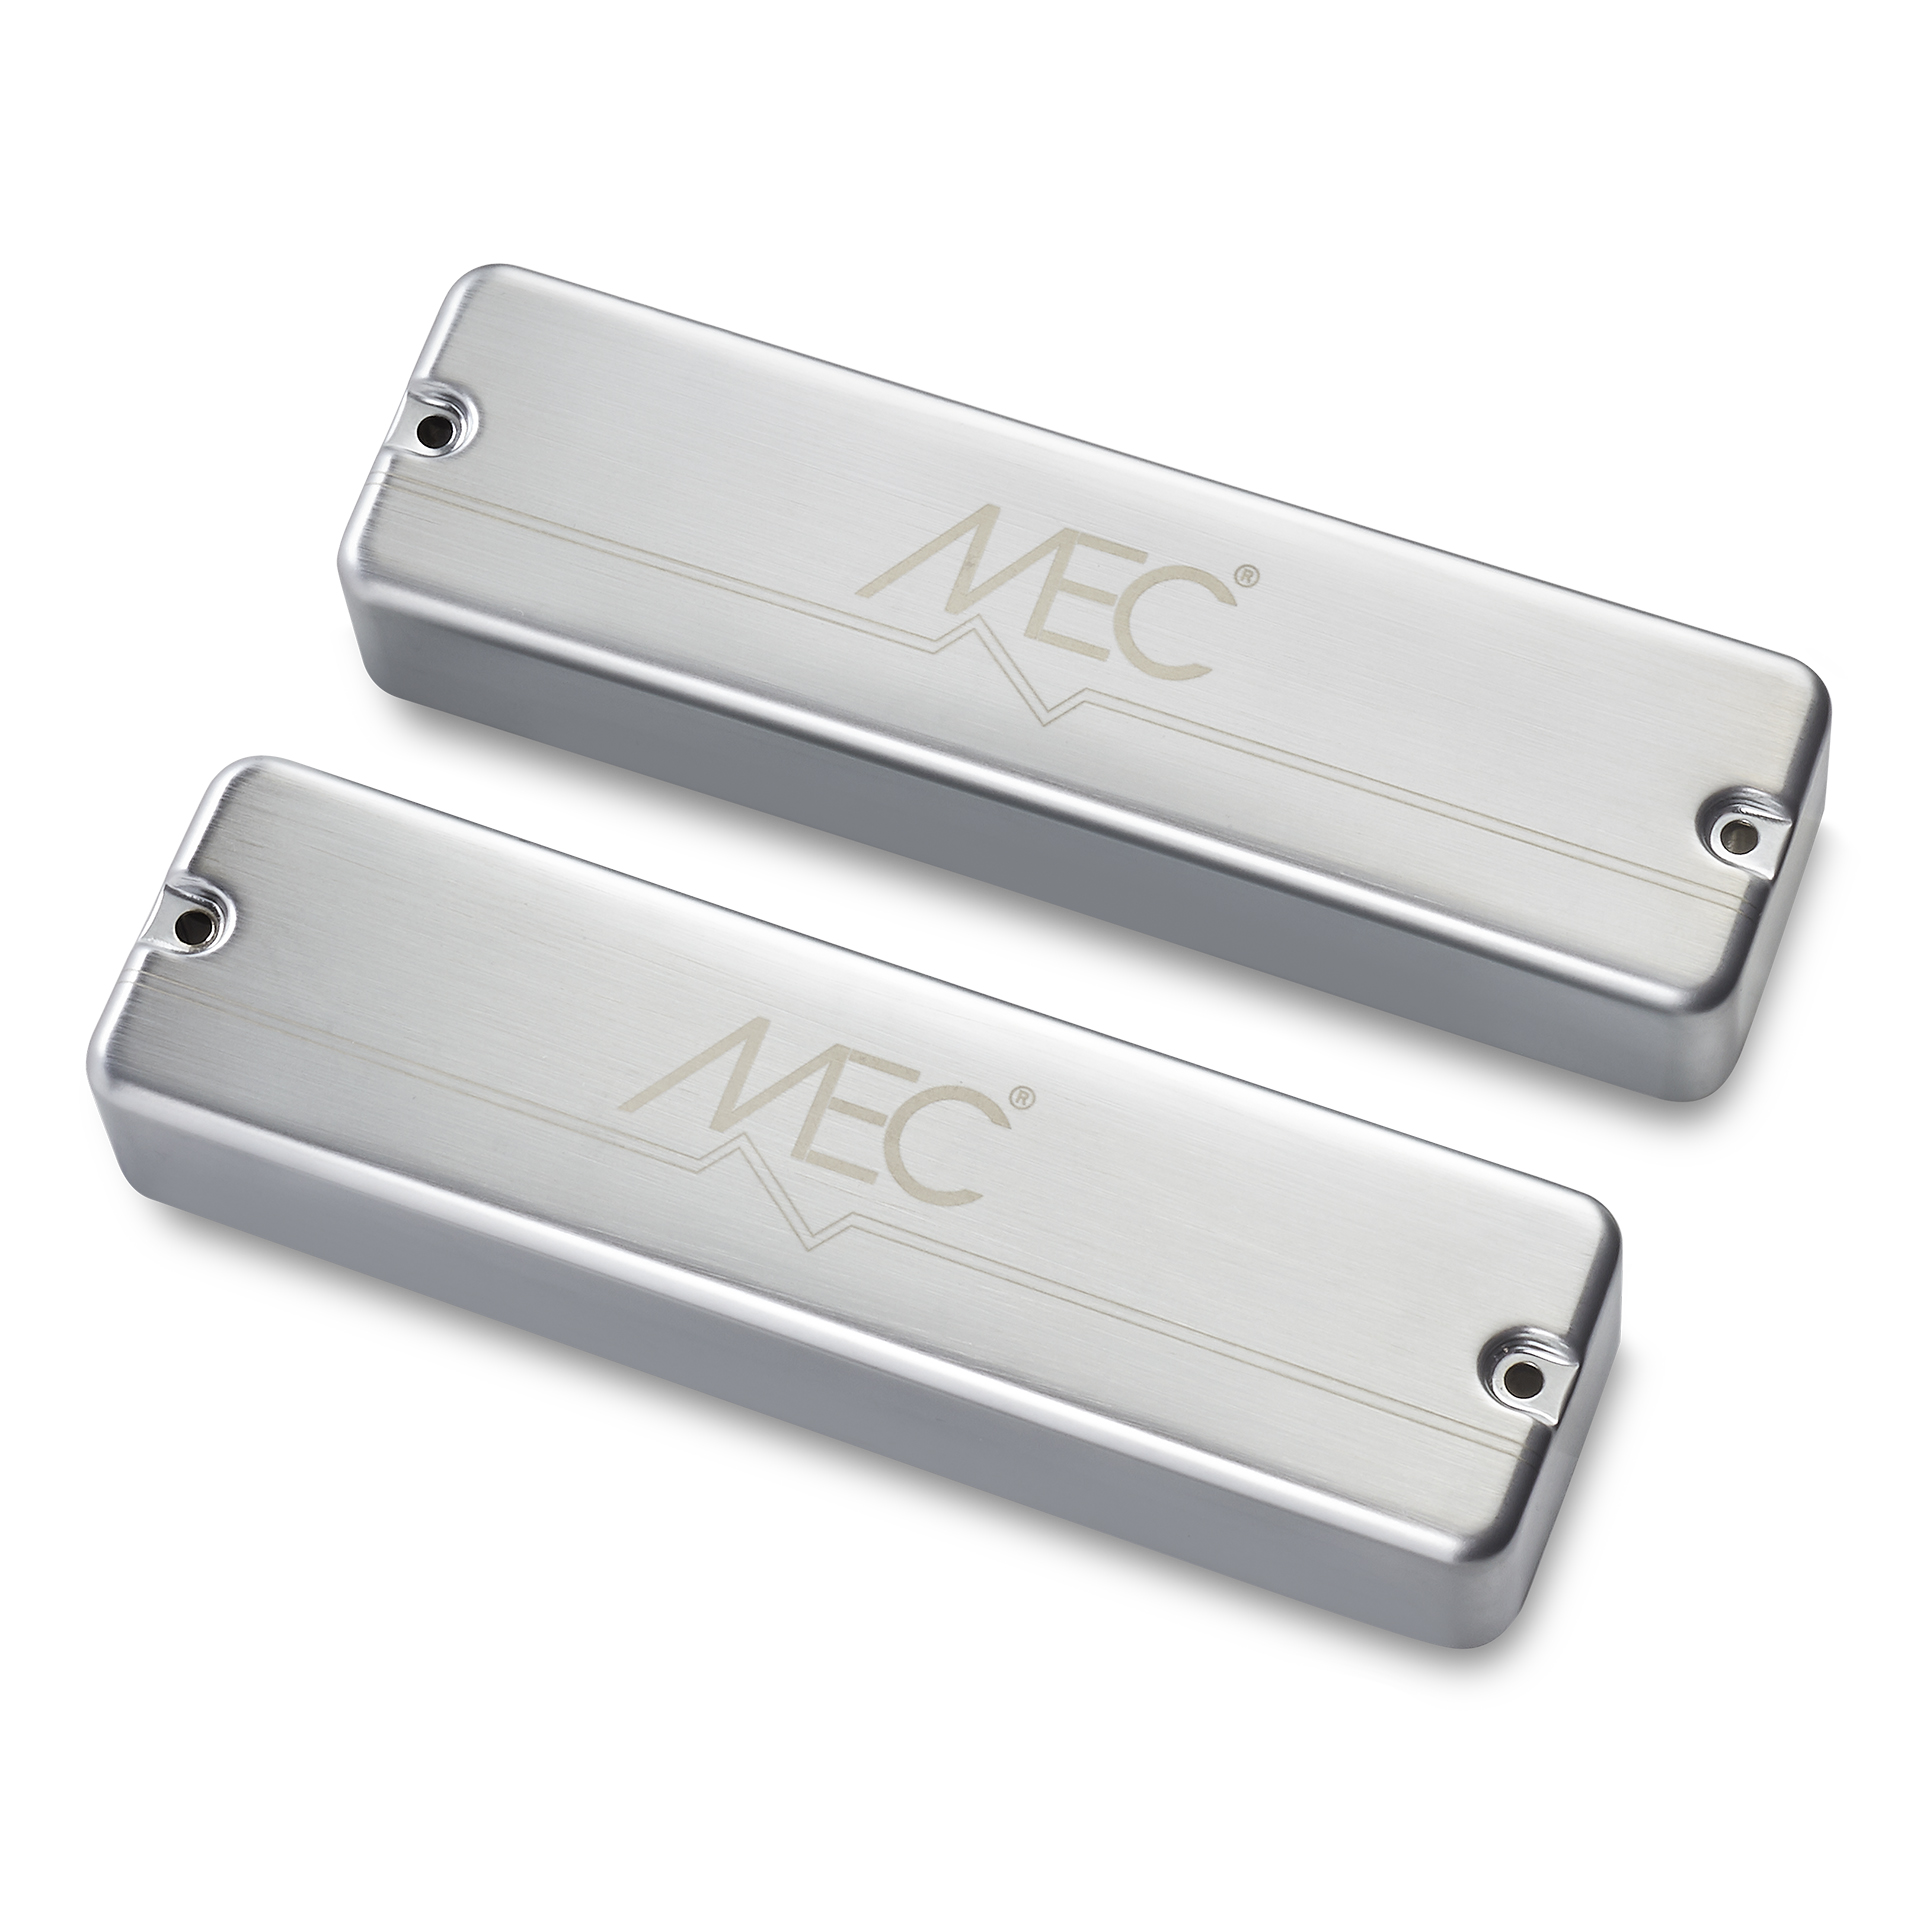 MEC Passive Soapbar Humbucker Bass Pickup Set, Metal Cover, 6-String - Brushed Chrome